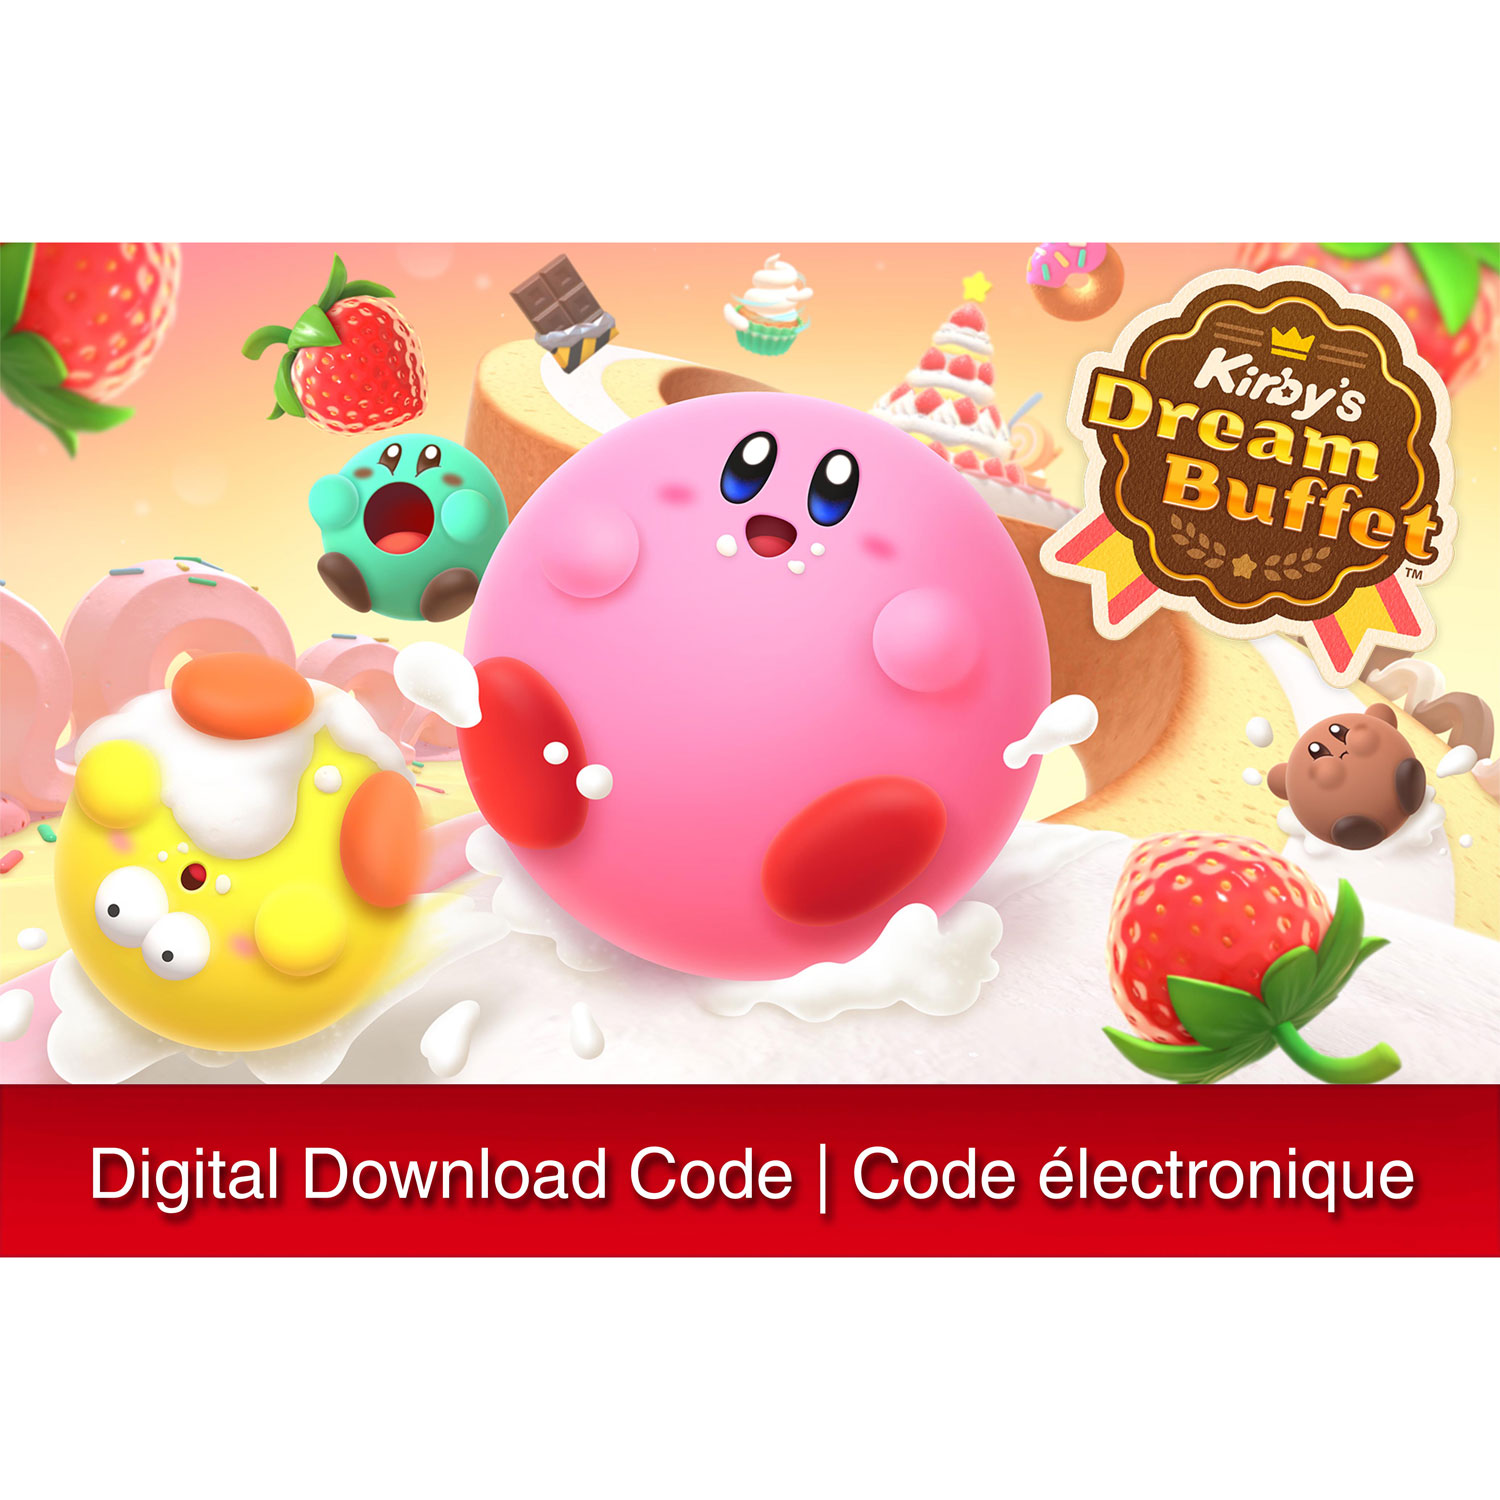 Kirby's Dream Buffet (Switch) - Digital Download